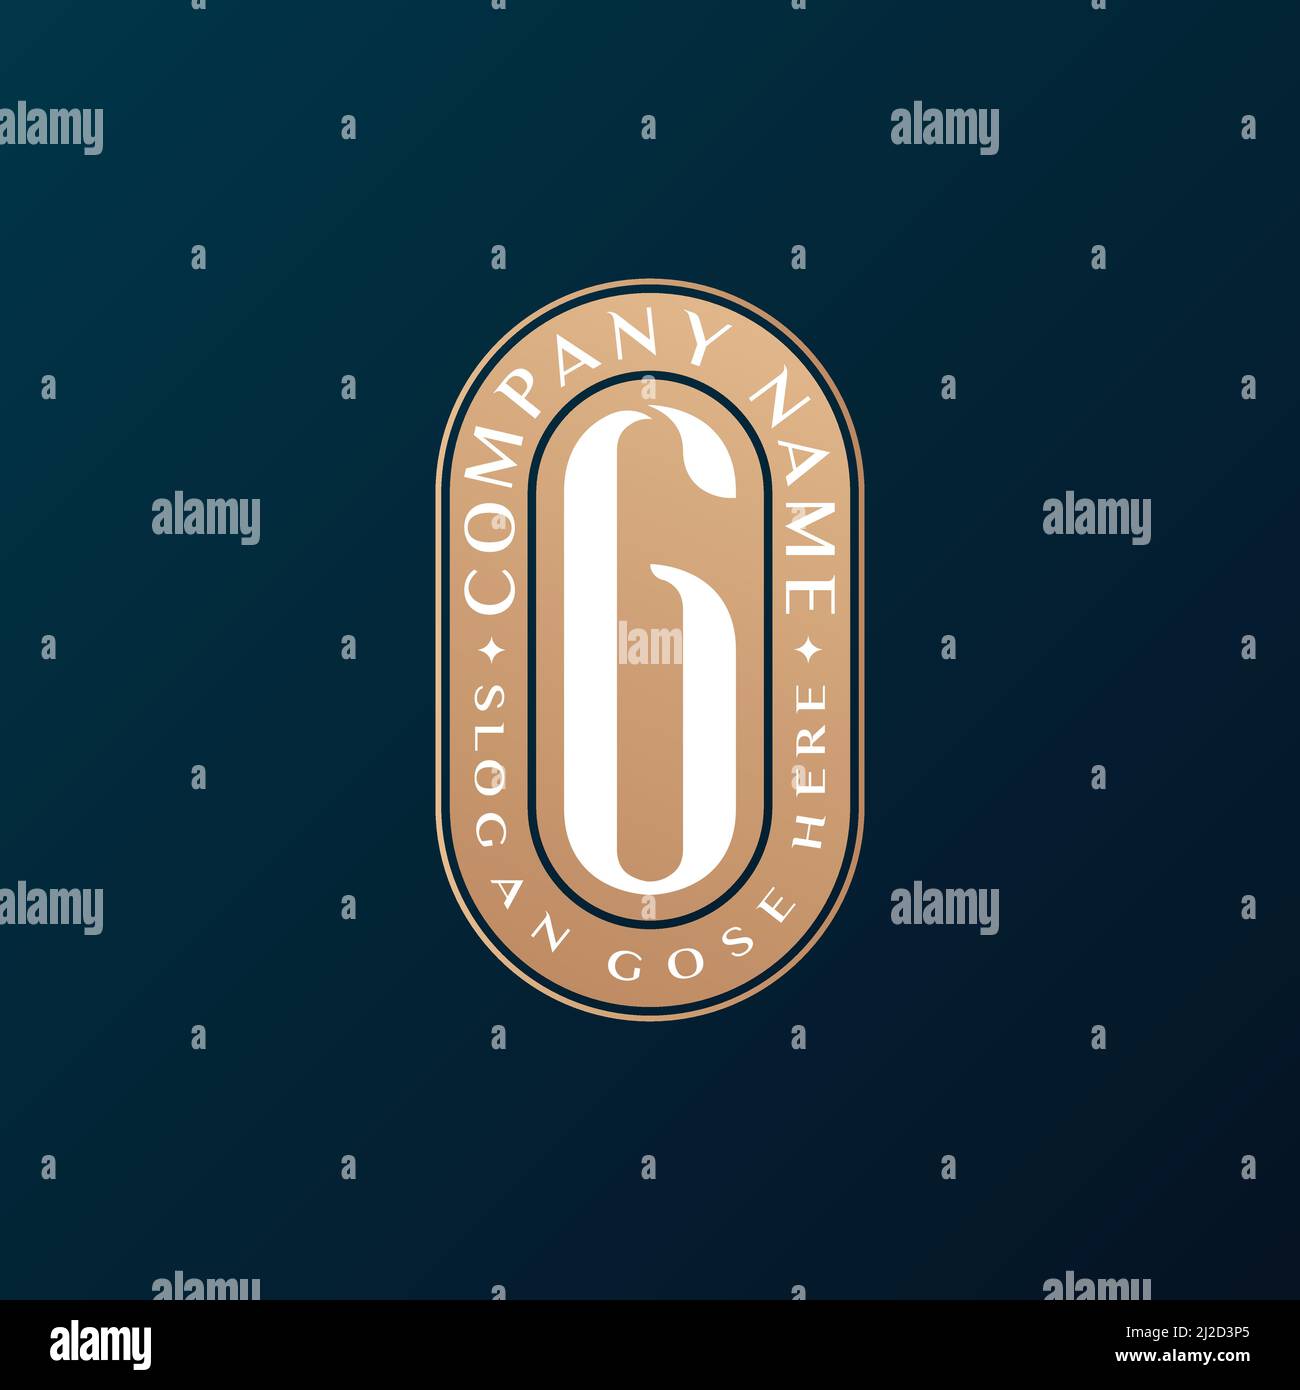 Abstract Emblem Premium luxury corporate identity elegant letter G logo design Stock Vector